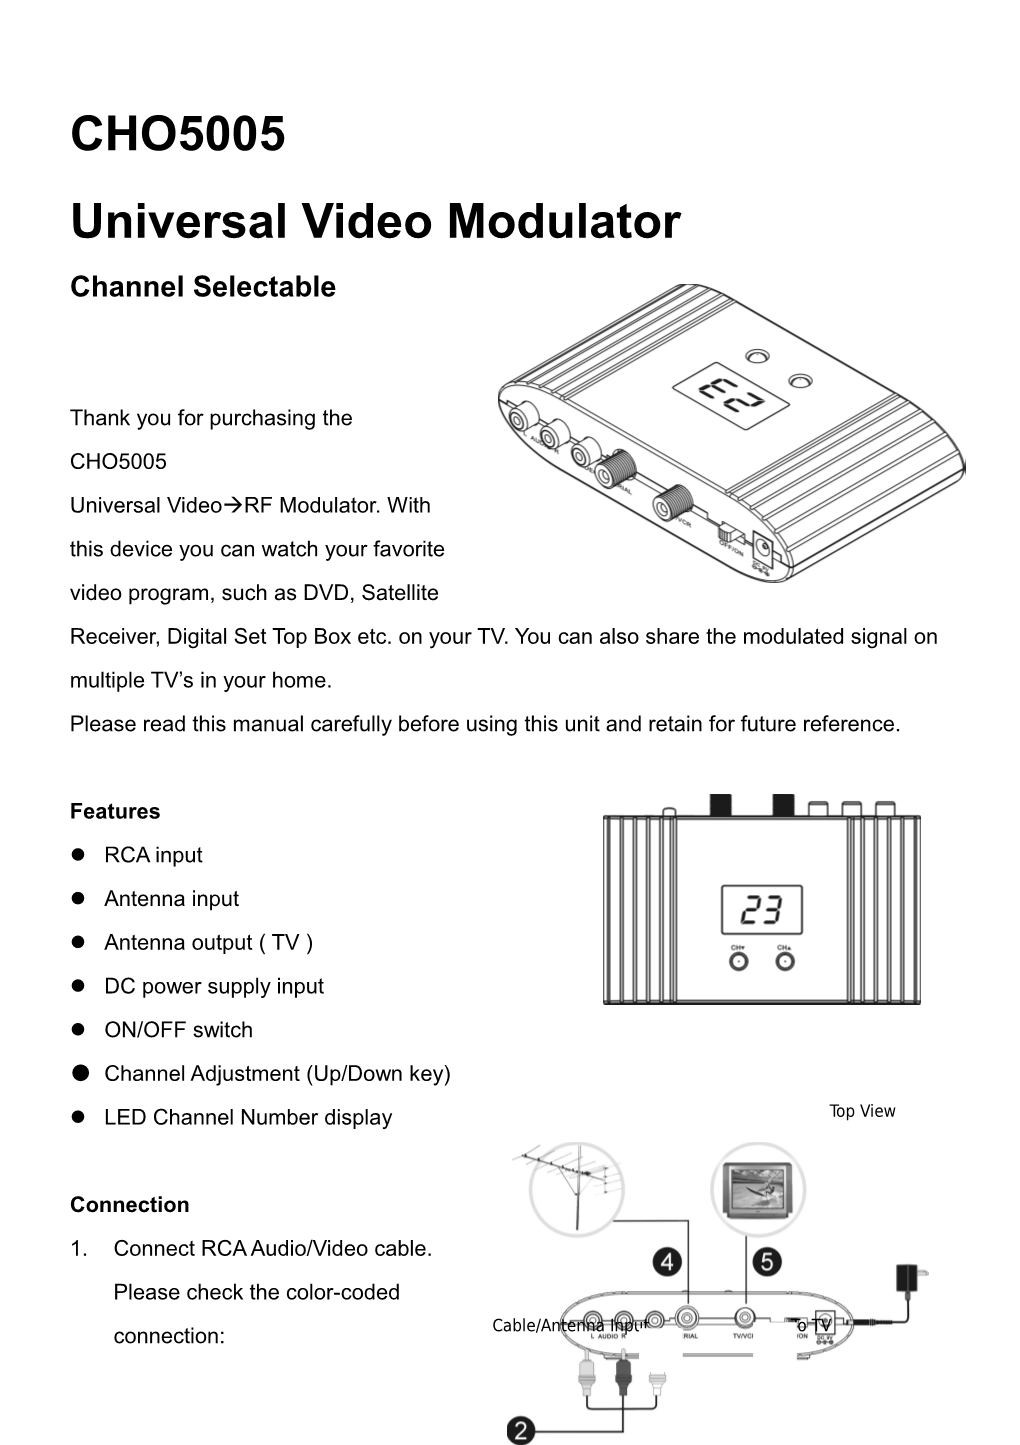 RF-2800 Universal Video Modulator